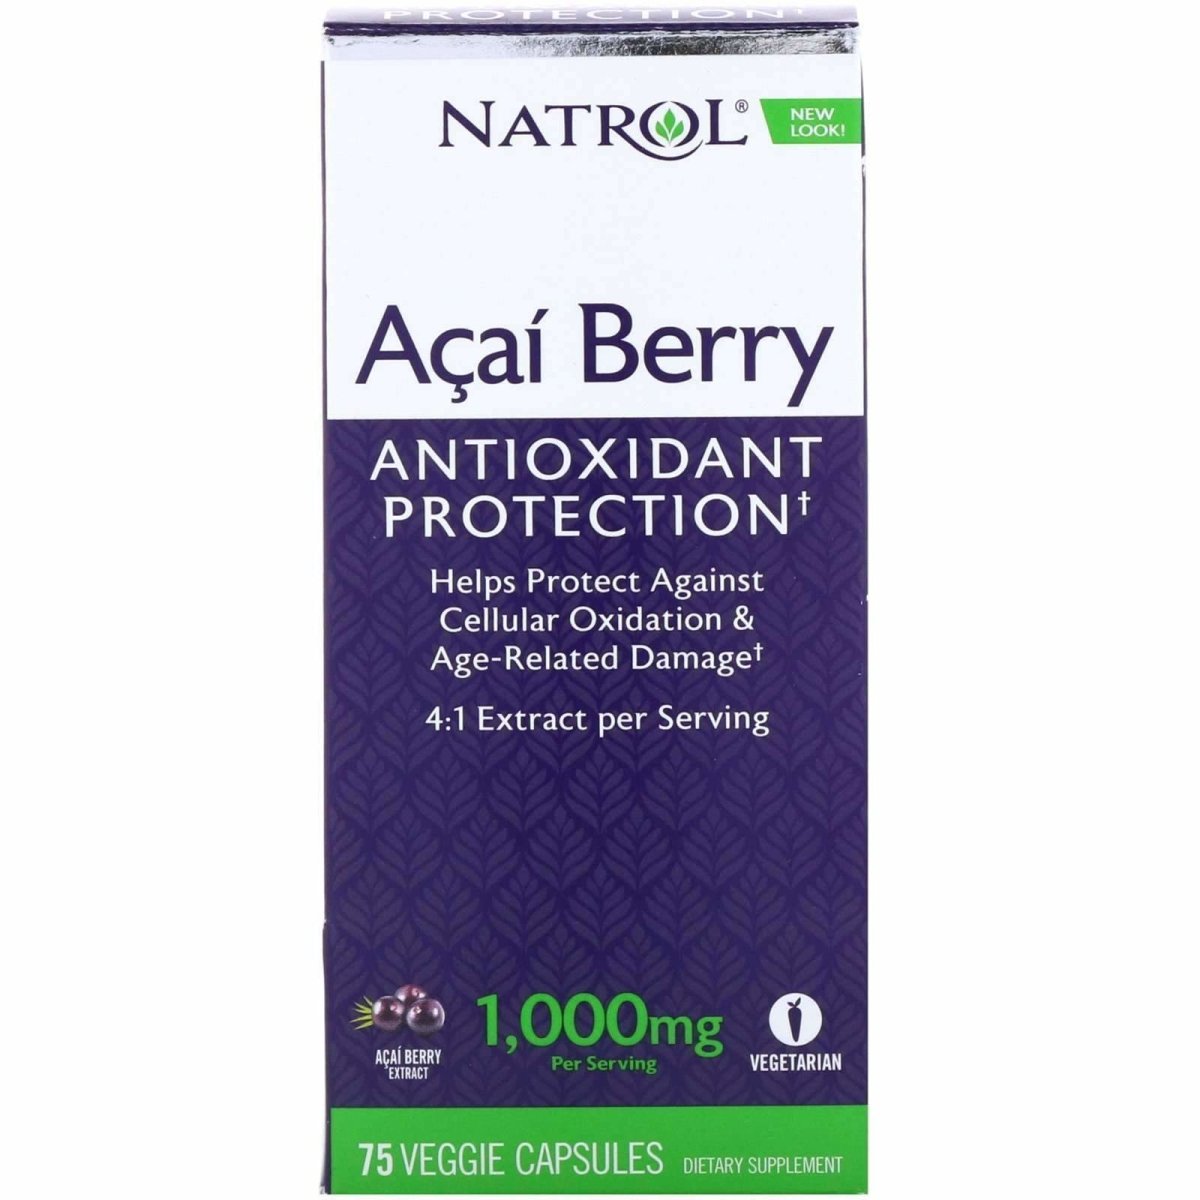 Açai Berry - Antioxidant Protection - 1,000mg - 75 Vegetarian Capsules